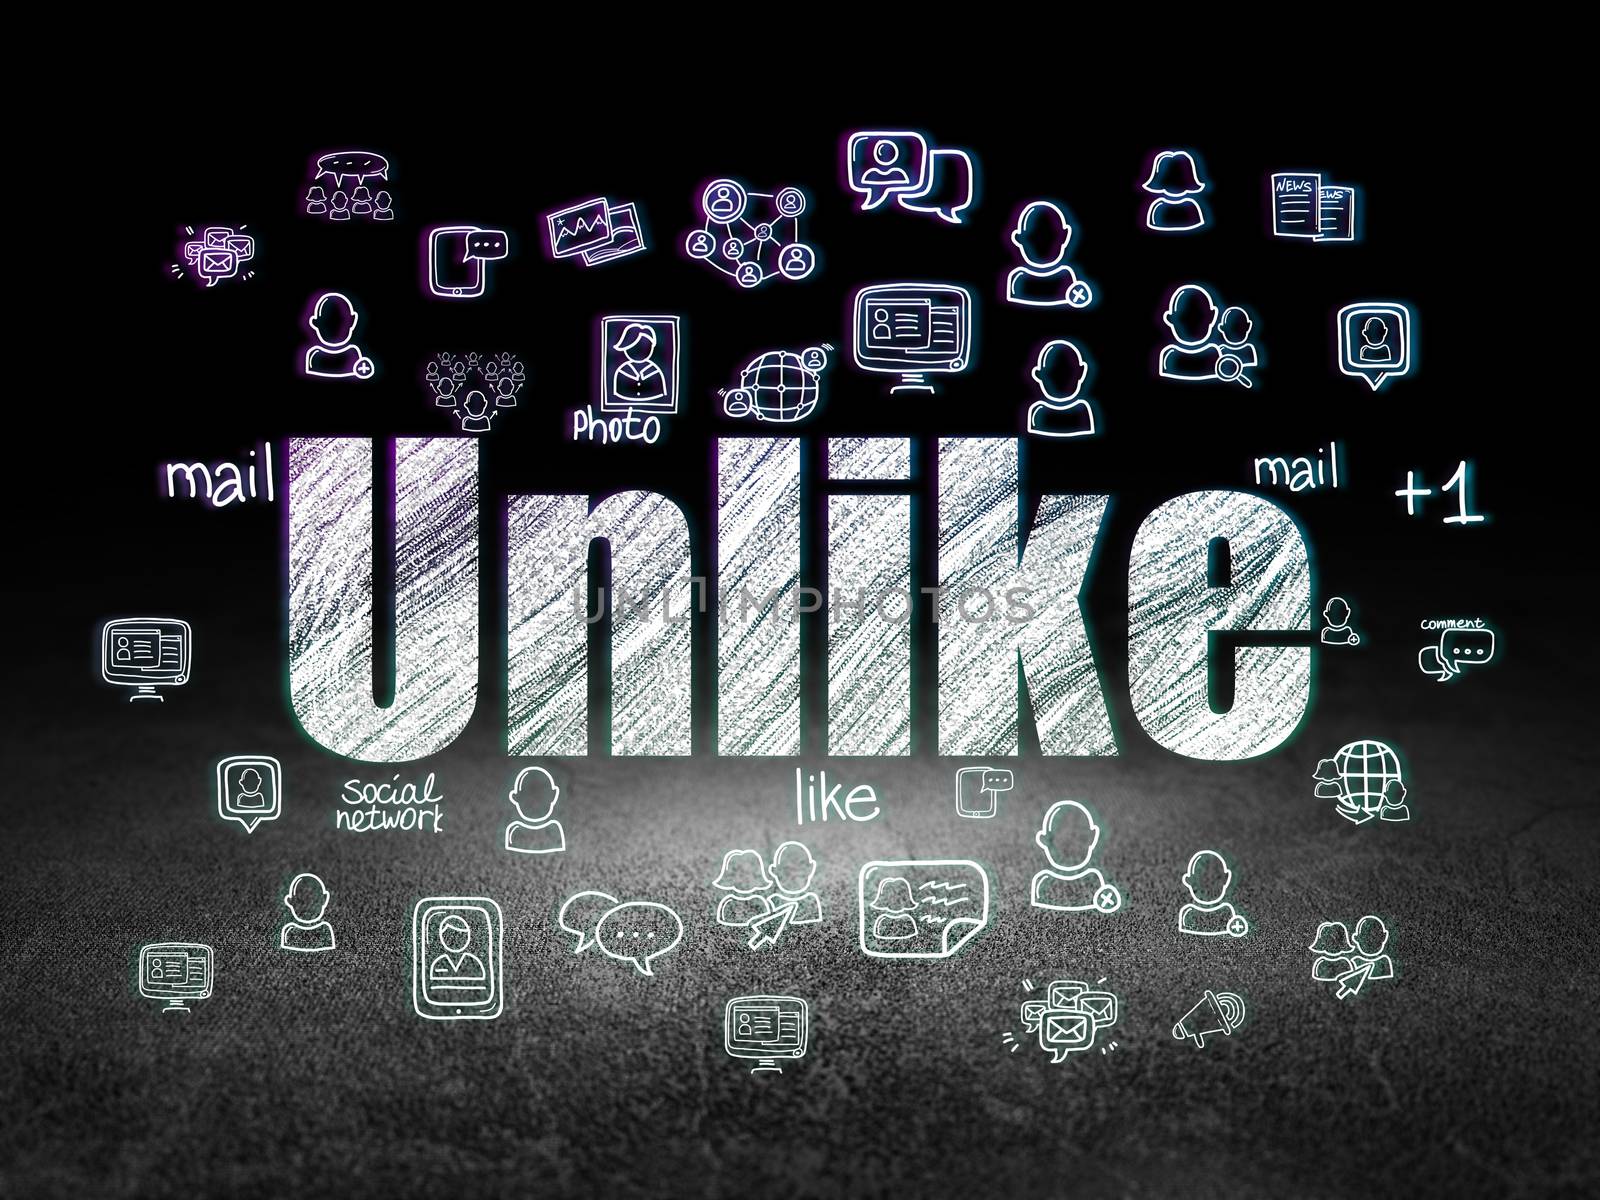 Social network concept: Unlike in grunge dark room by maxkabakov